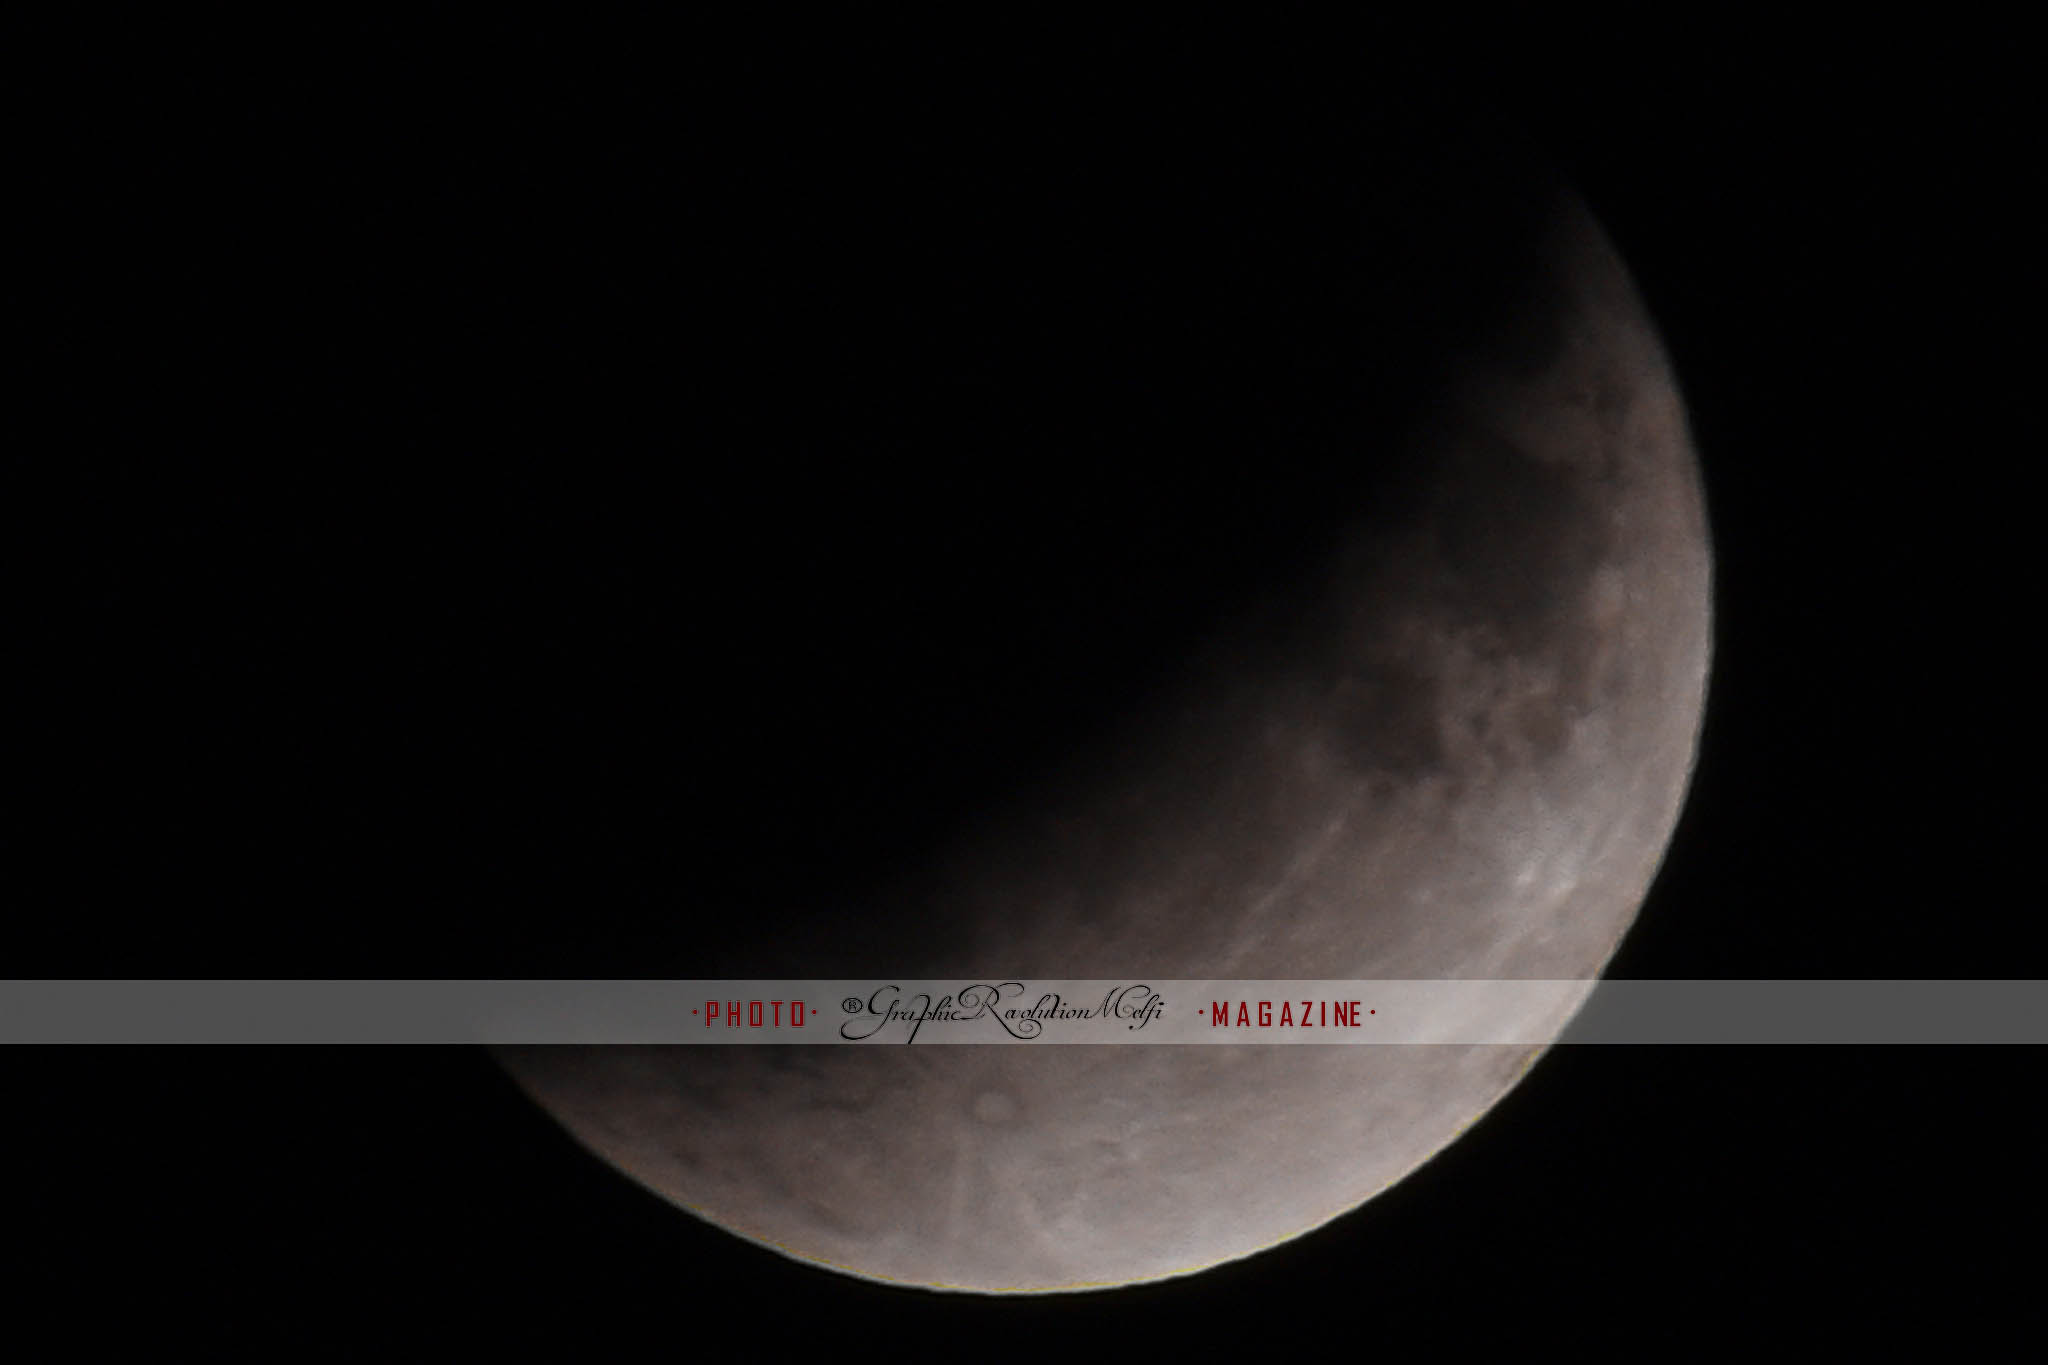 L'eclissi parziale di Luna le foto del 2019 da melfi